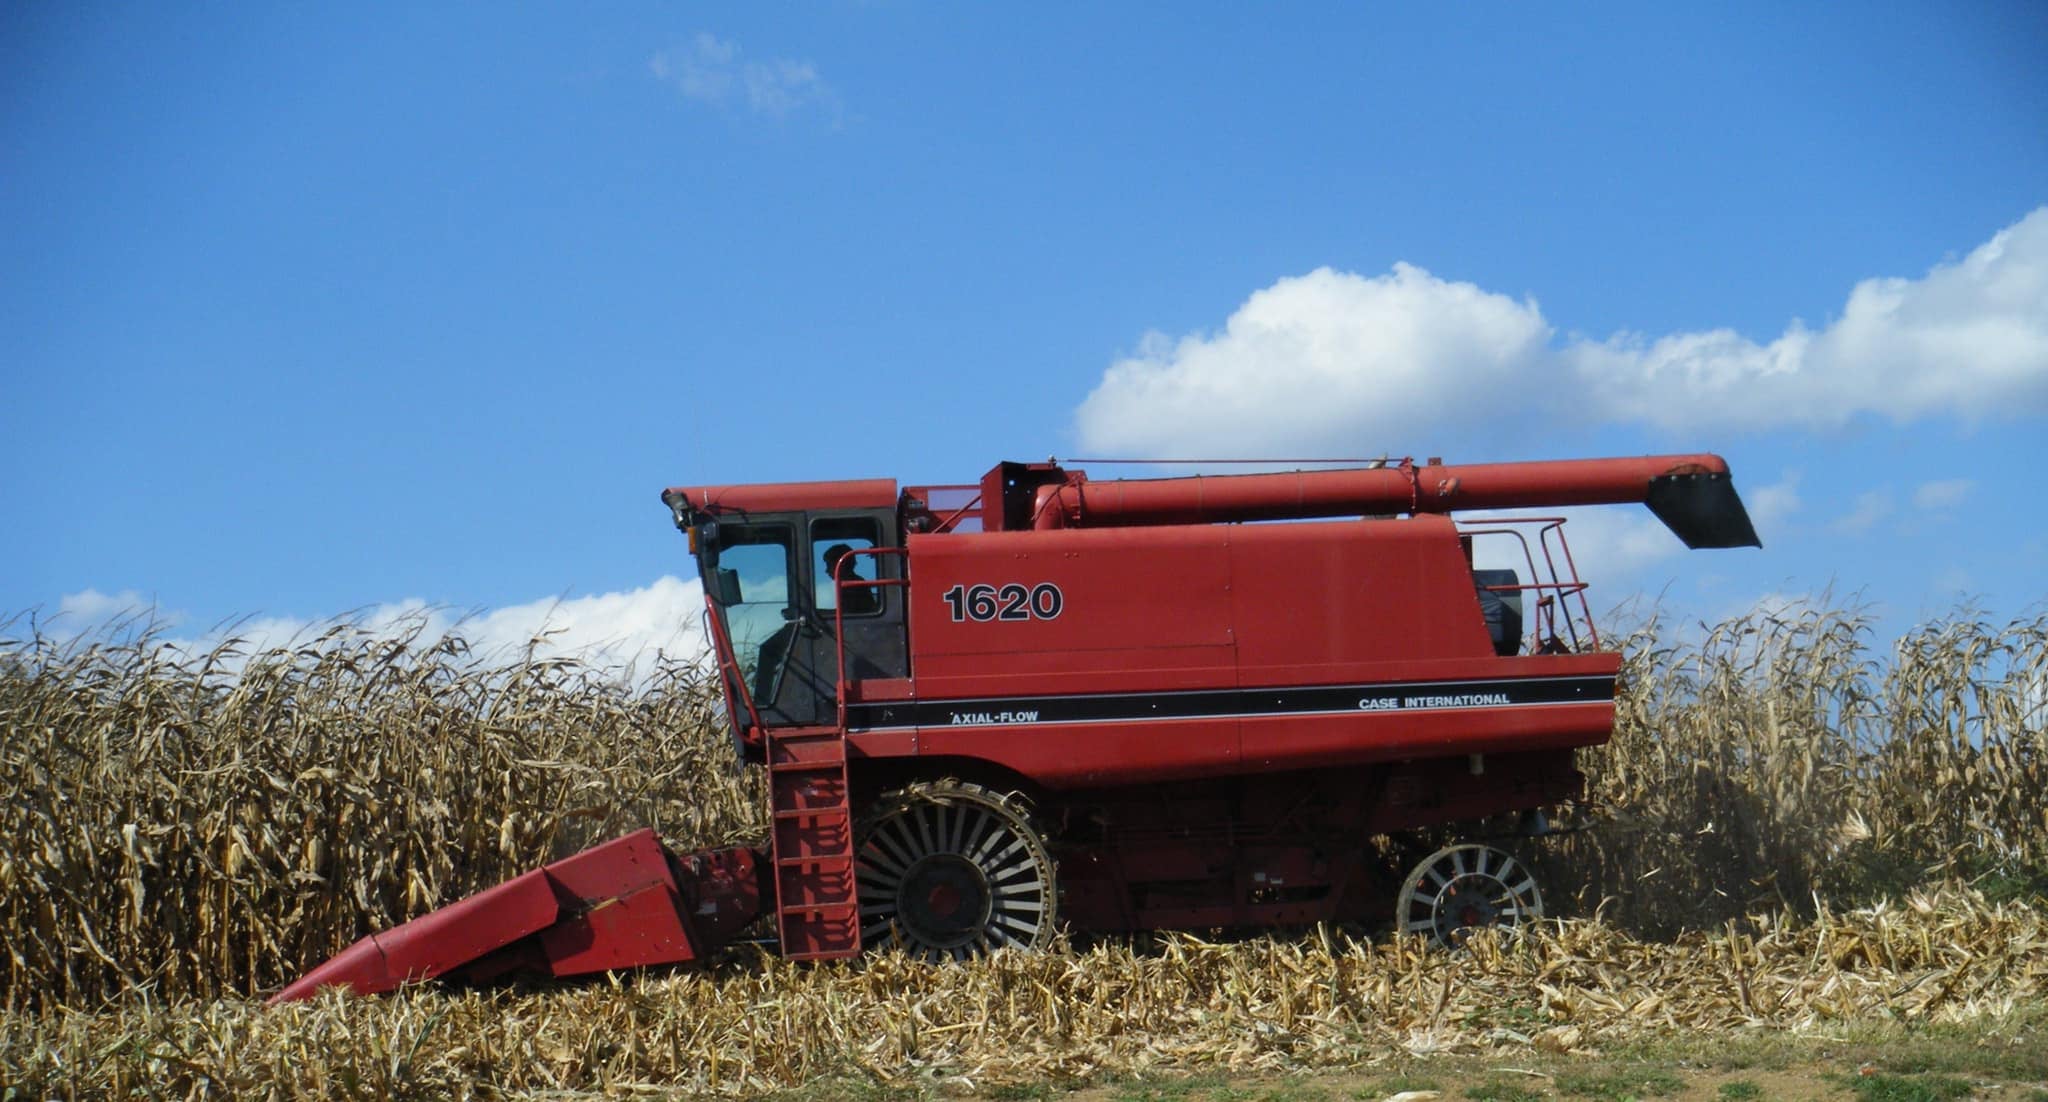 Steel Wheels on Tractors Help the Amish and Mennonites Avoid Temptation